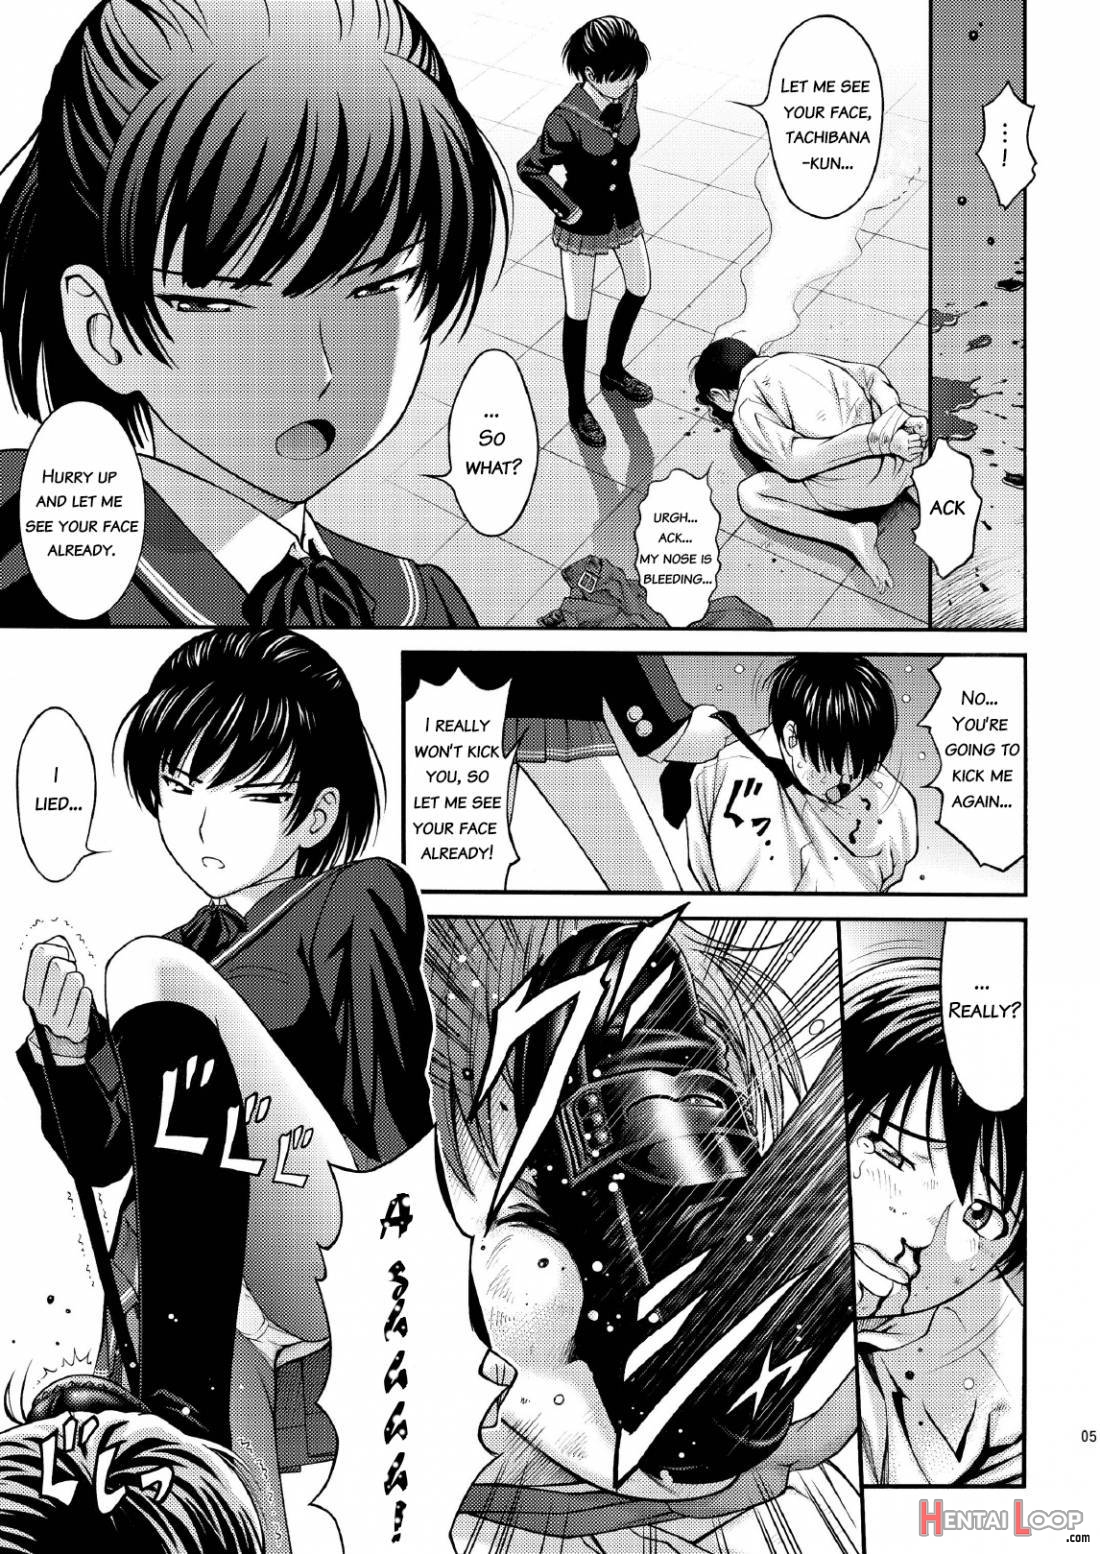 Tsukahara Ss page 4